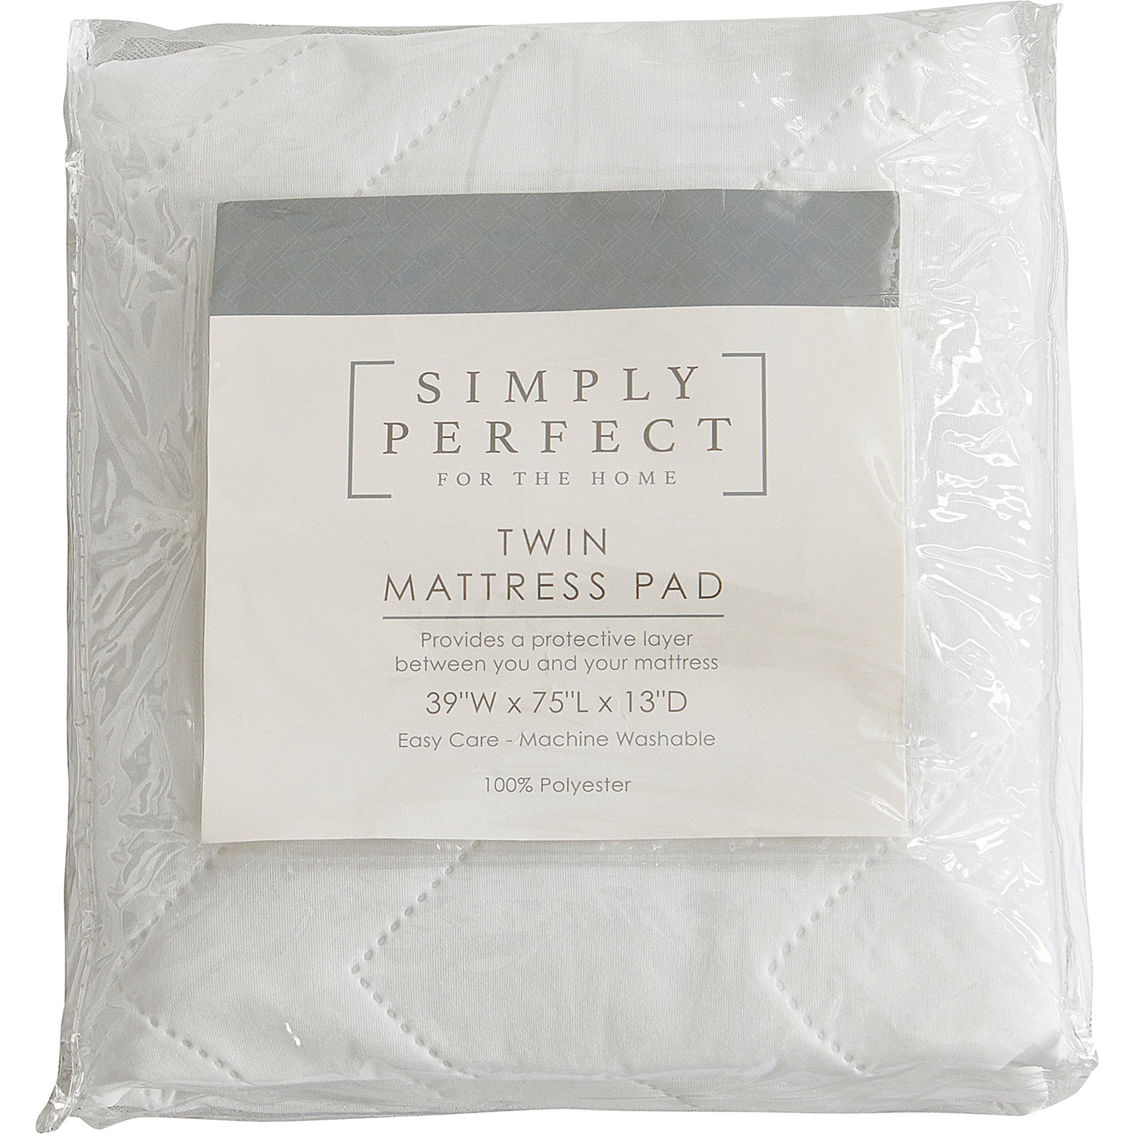 Simply Perfect Mattress Pad - Image 2 of 8